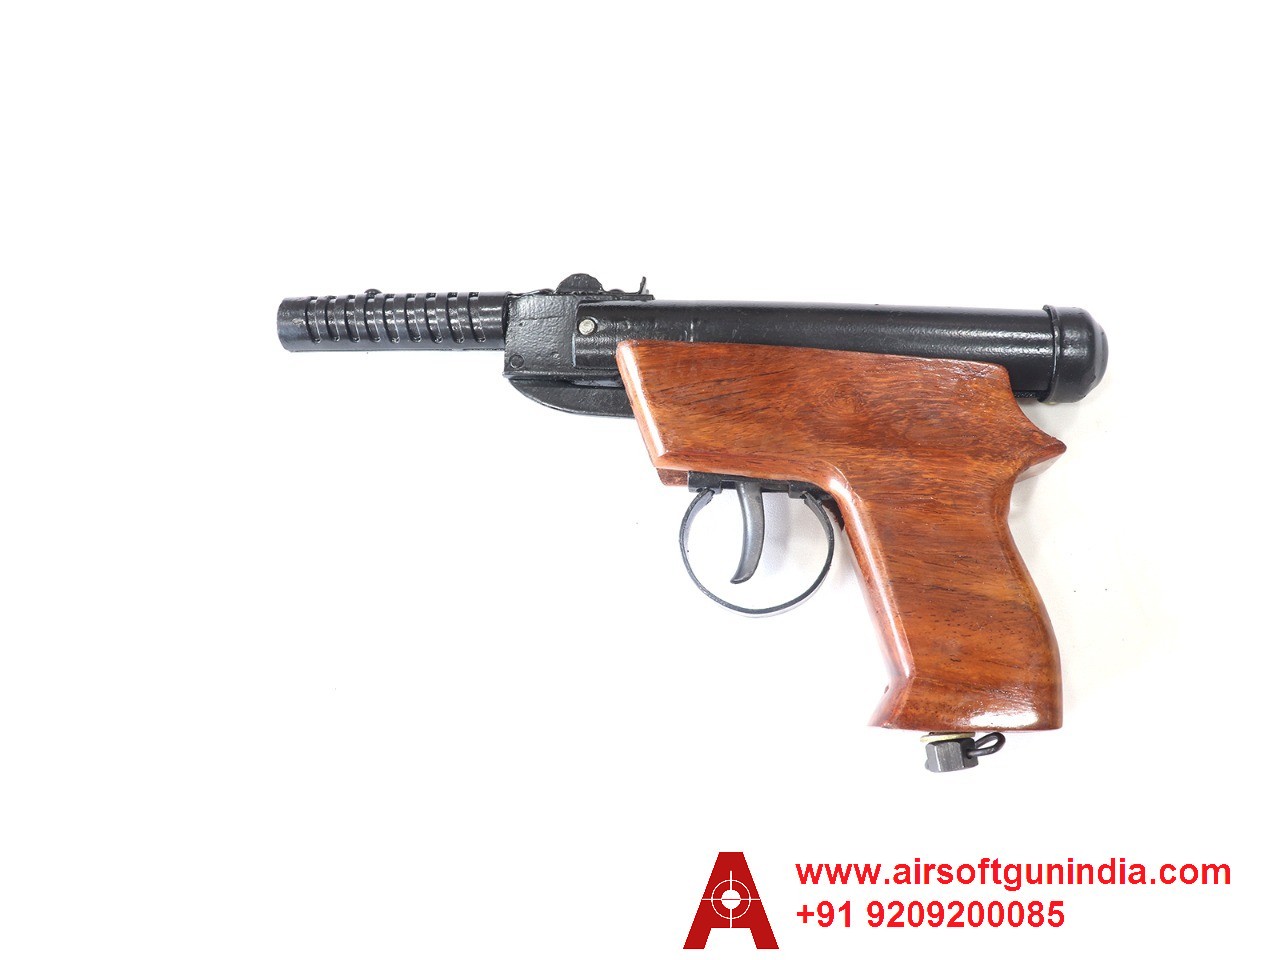 Prince Wooden Grip Single-Shot .177 Caliber / 4.5 Mm Indian Air Pistol By Airsoft Gun India.